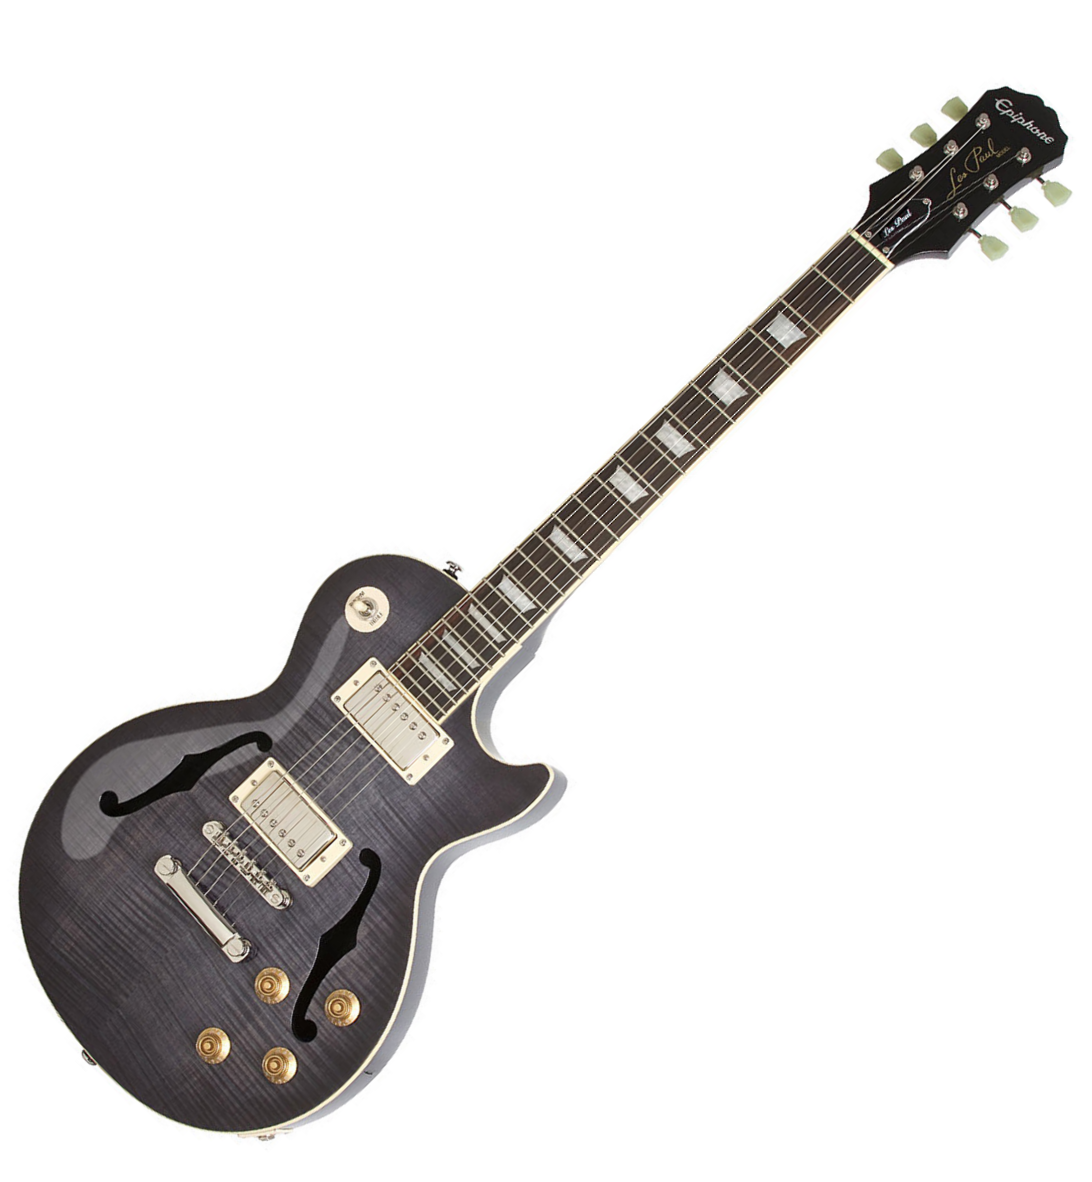 Epiphone Les Paul Es Pro 2016 - Trans Black - Semi-hollow electric guitar - Variation 5